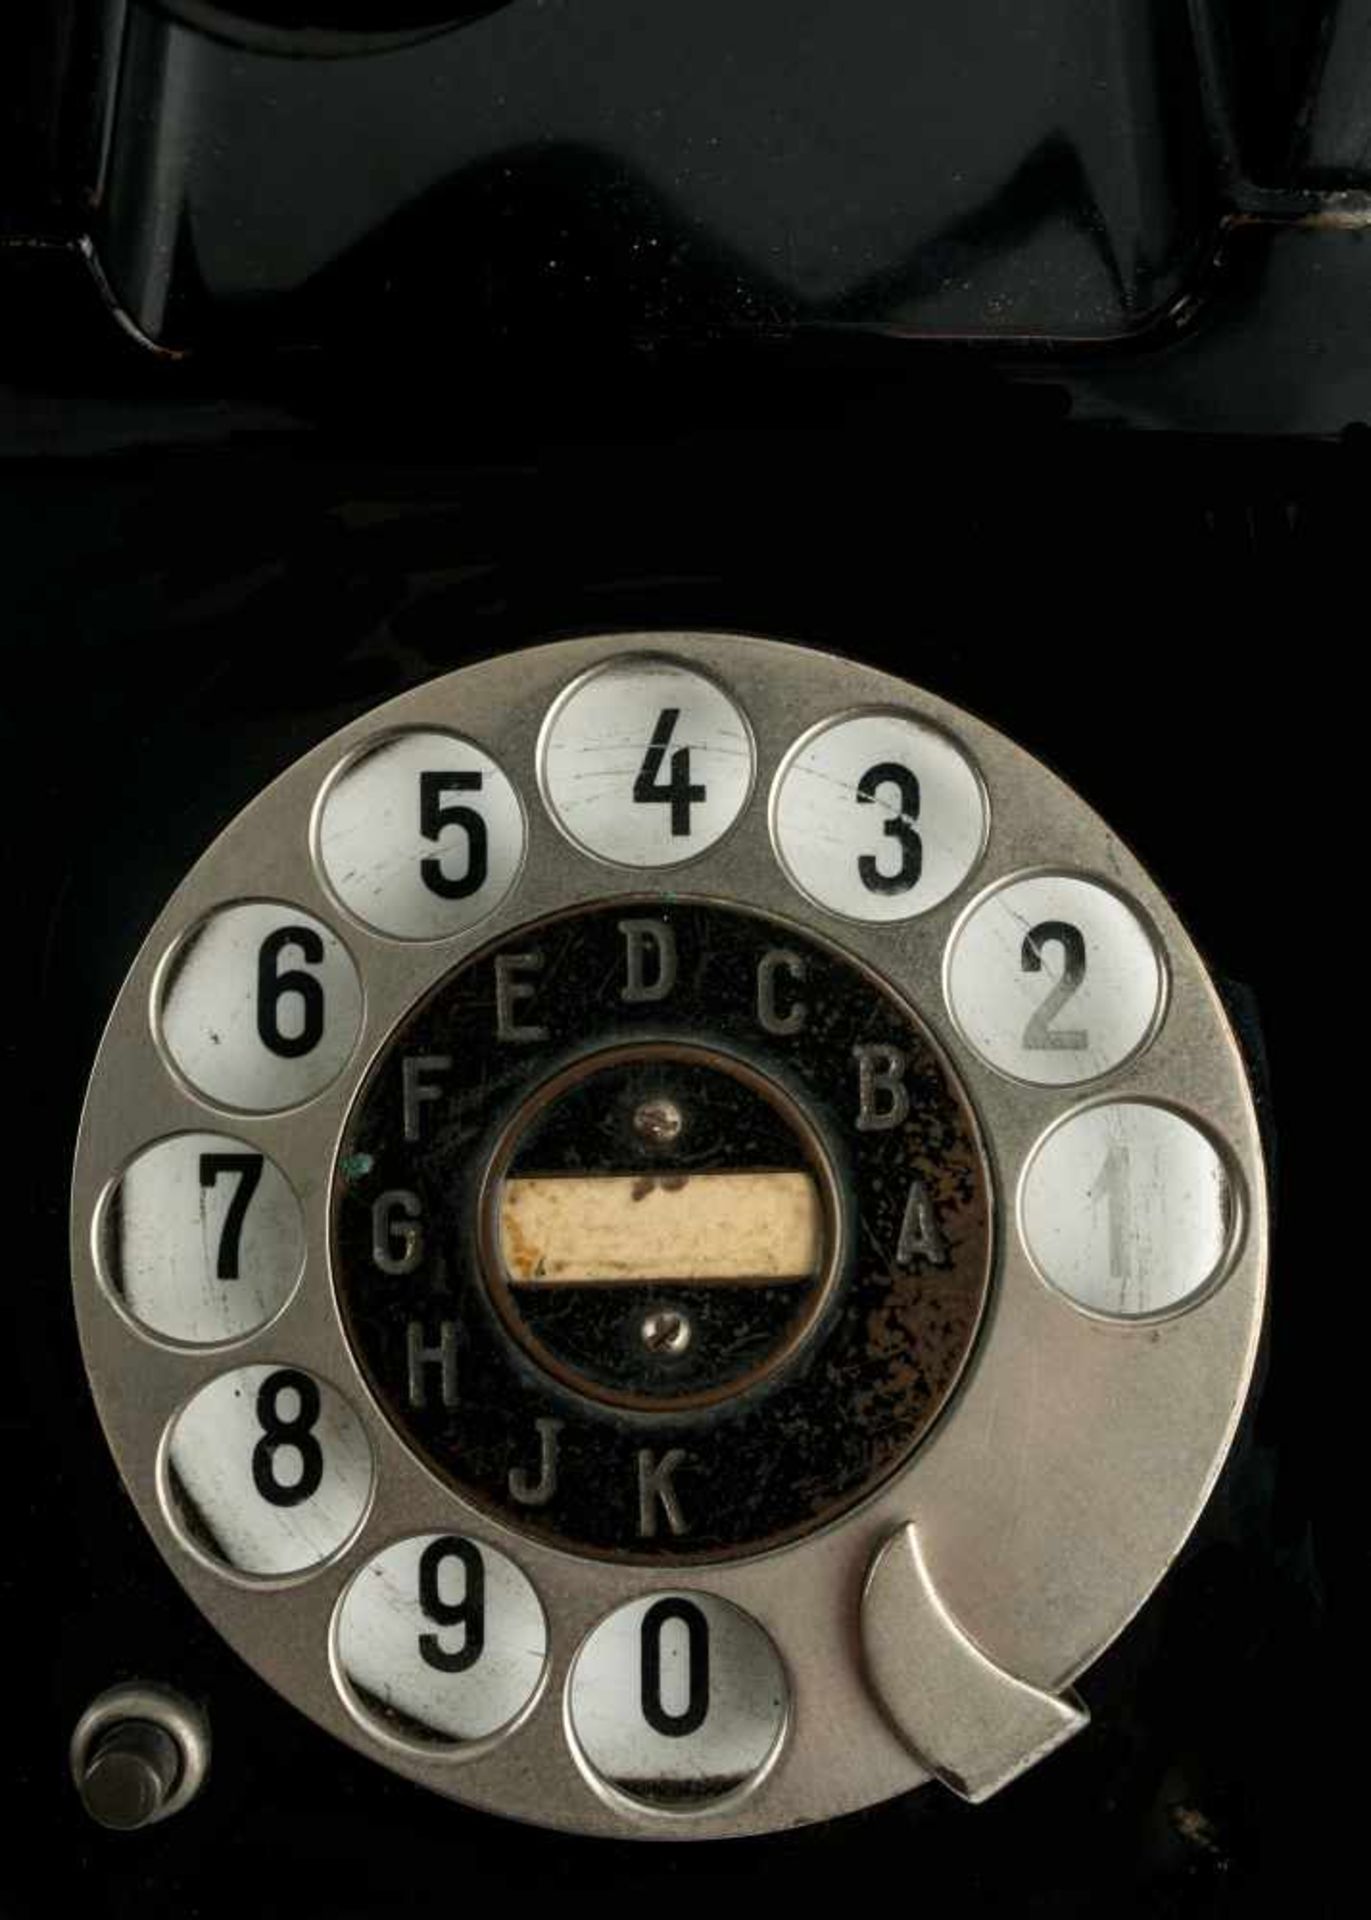 Bauhaus Dessau 'Bauhaus'-Telefon, 1929 H. 13,2 x 11,2 x 15,8 cm; Hörer: L. 24,8 cm. H. Fuld u. - Bild 3 aus 3